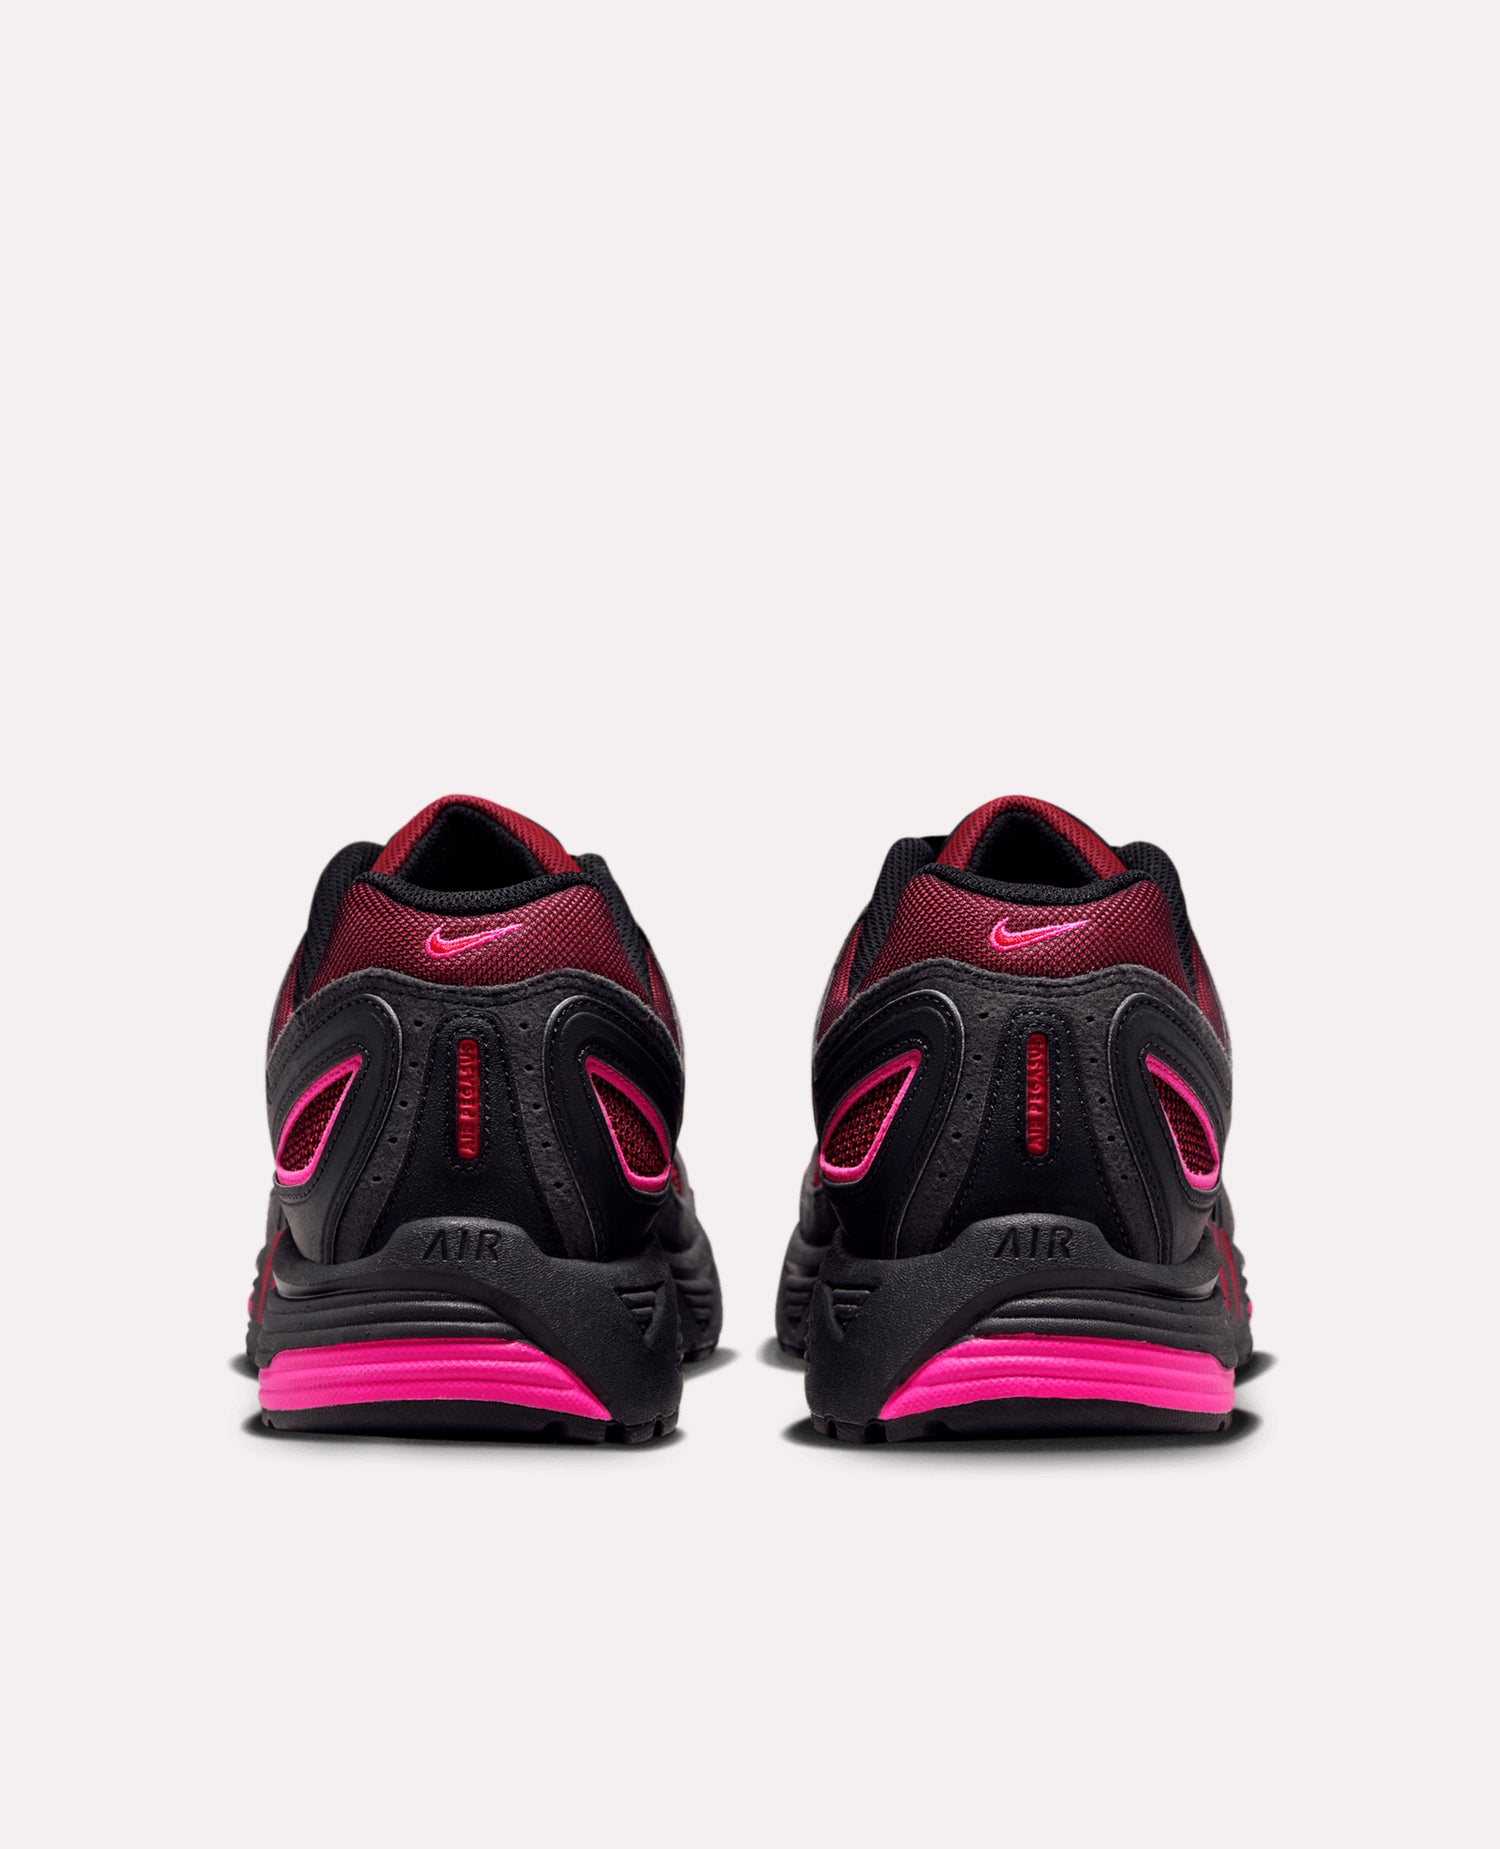 Nike Air Peg 2K5 (Black/Fire Red-Fierce Pink)